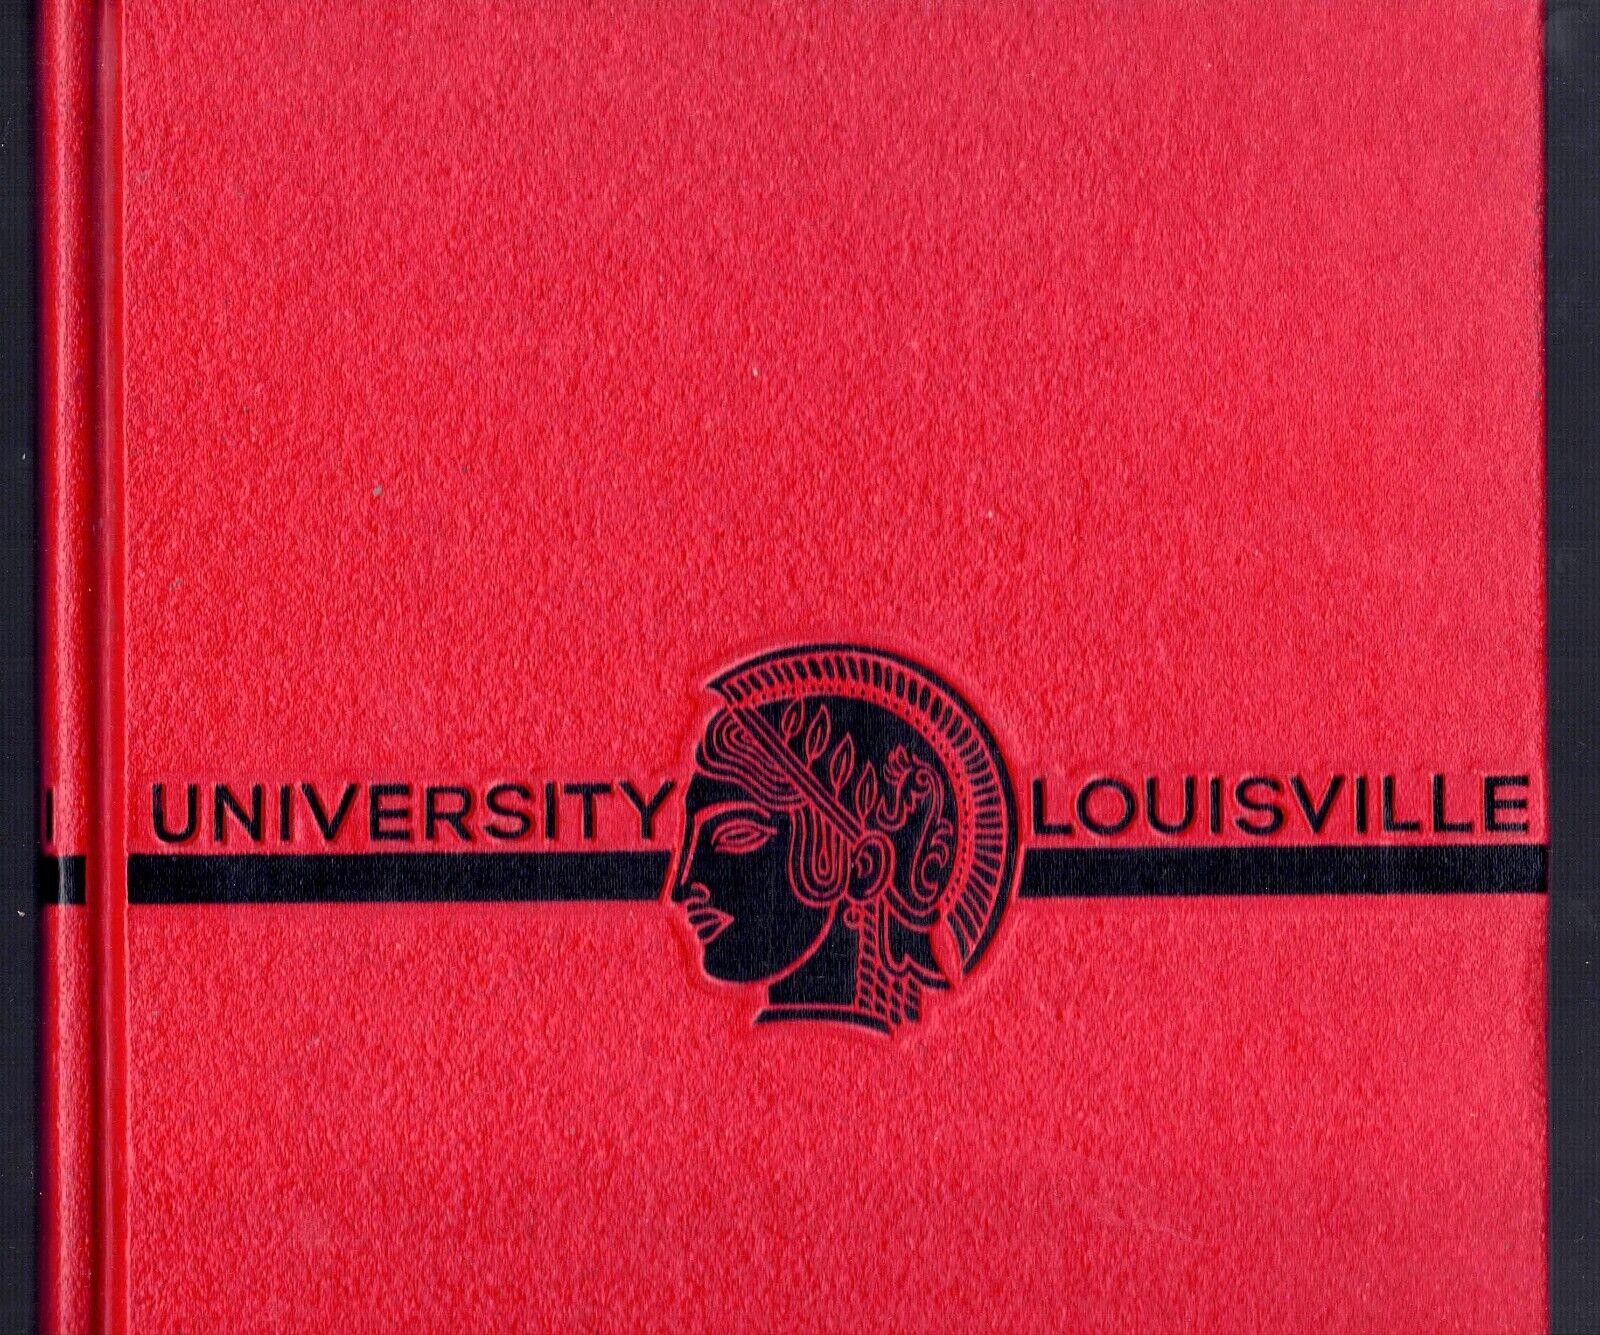 1961 University of Louisville Yearbook The Thoroughbred, Louisville, Kentucky